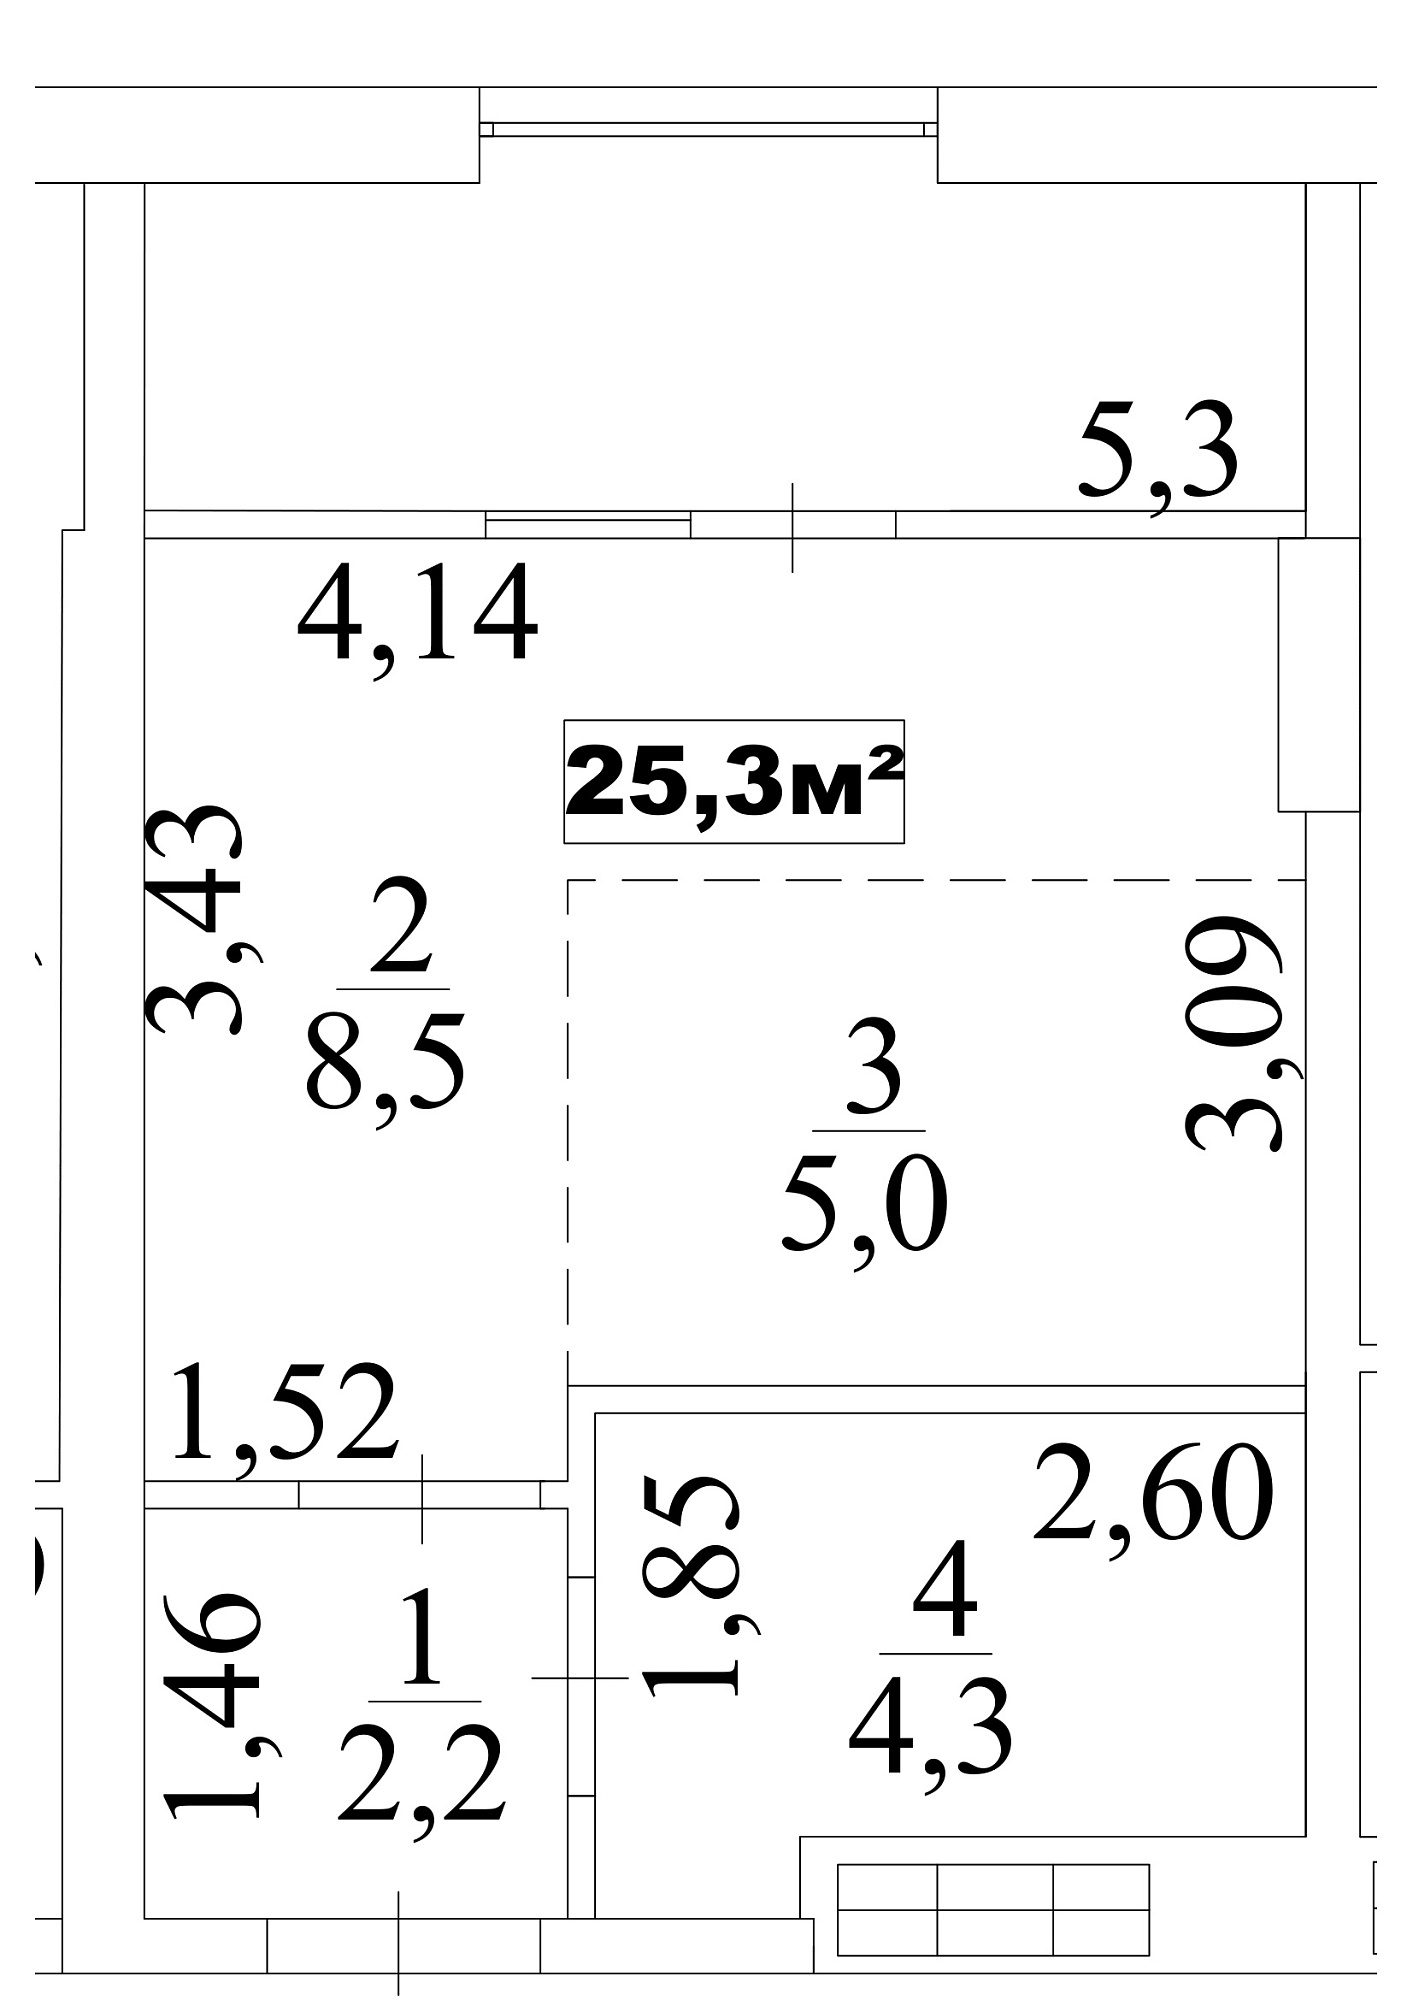 Planning Smart flats area 25.3m2, AB-10-10/0084в.